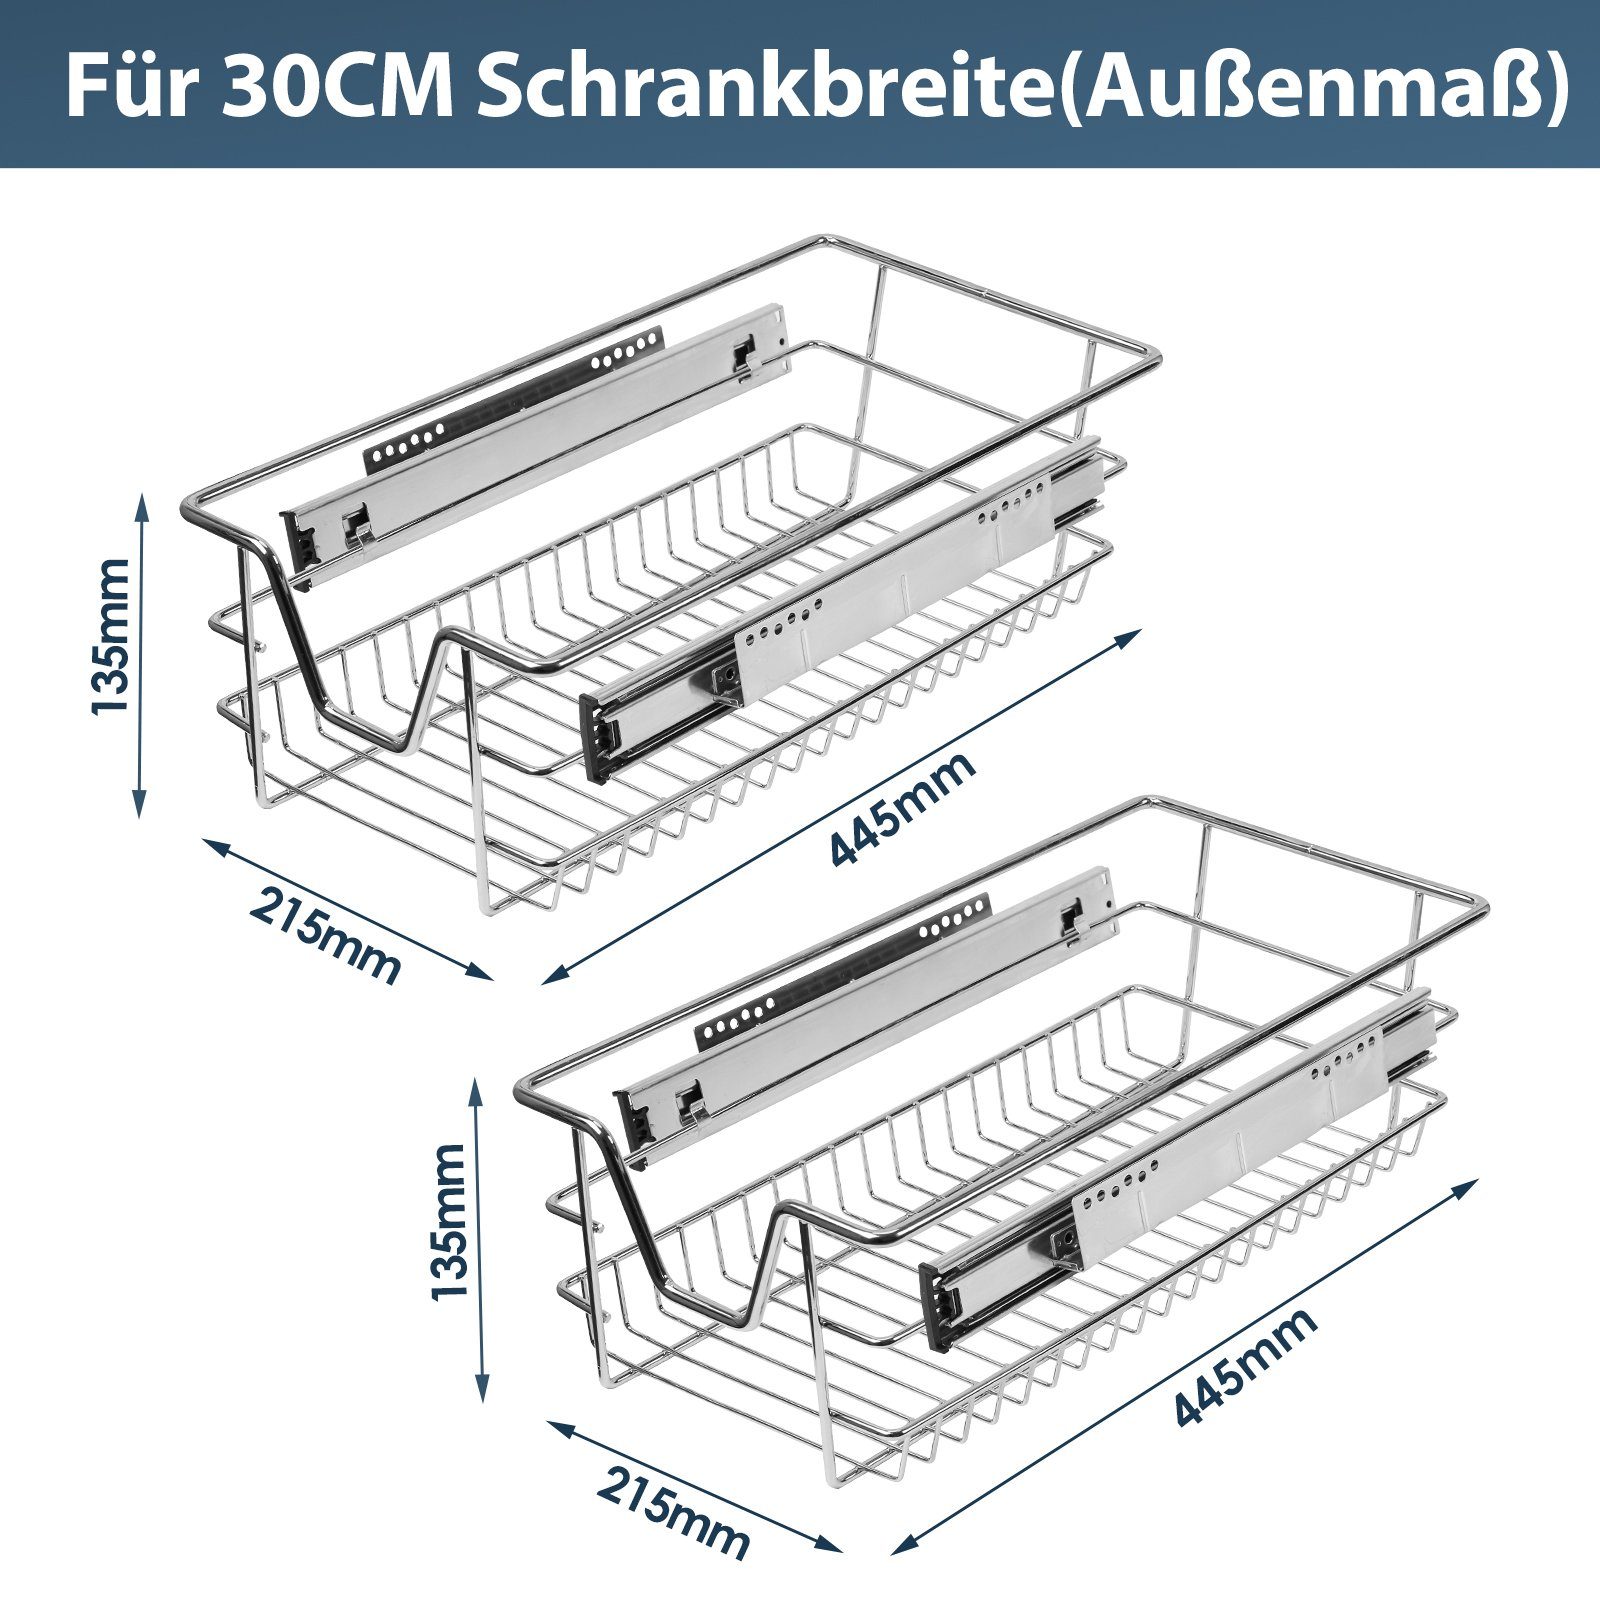 2x Clanmacy Küchenschublade Schrankauszug Teleskopschublade Schublade Vollauszug 30cm